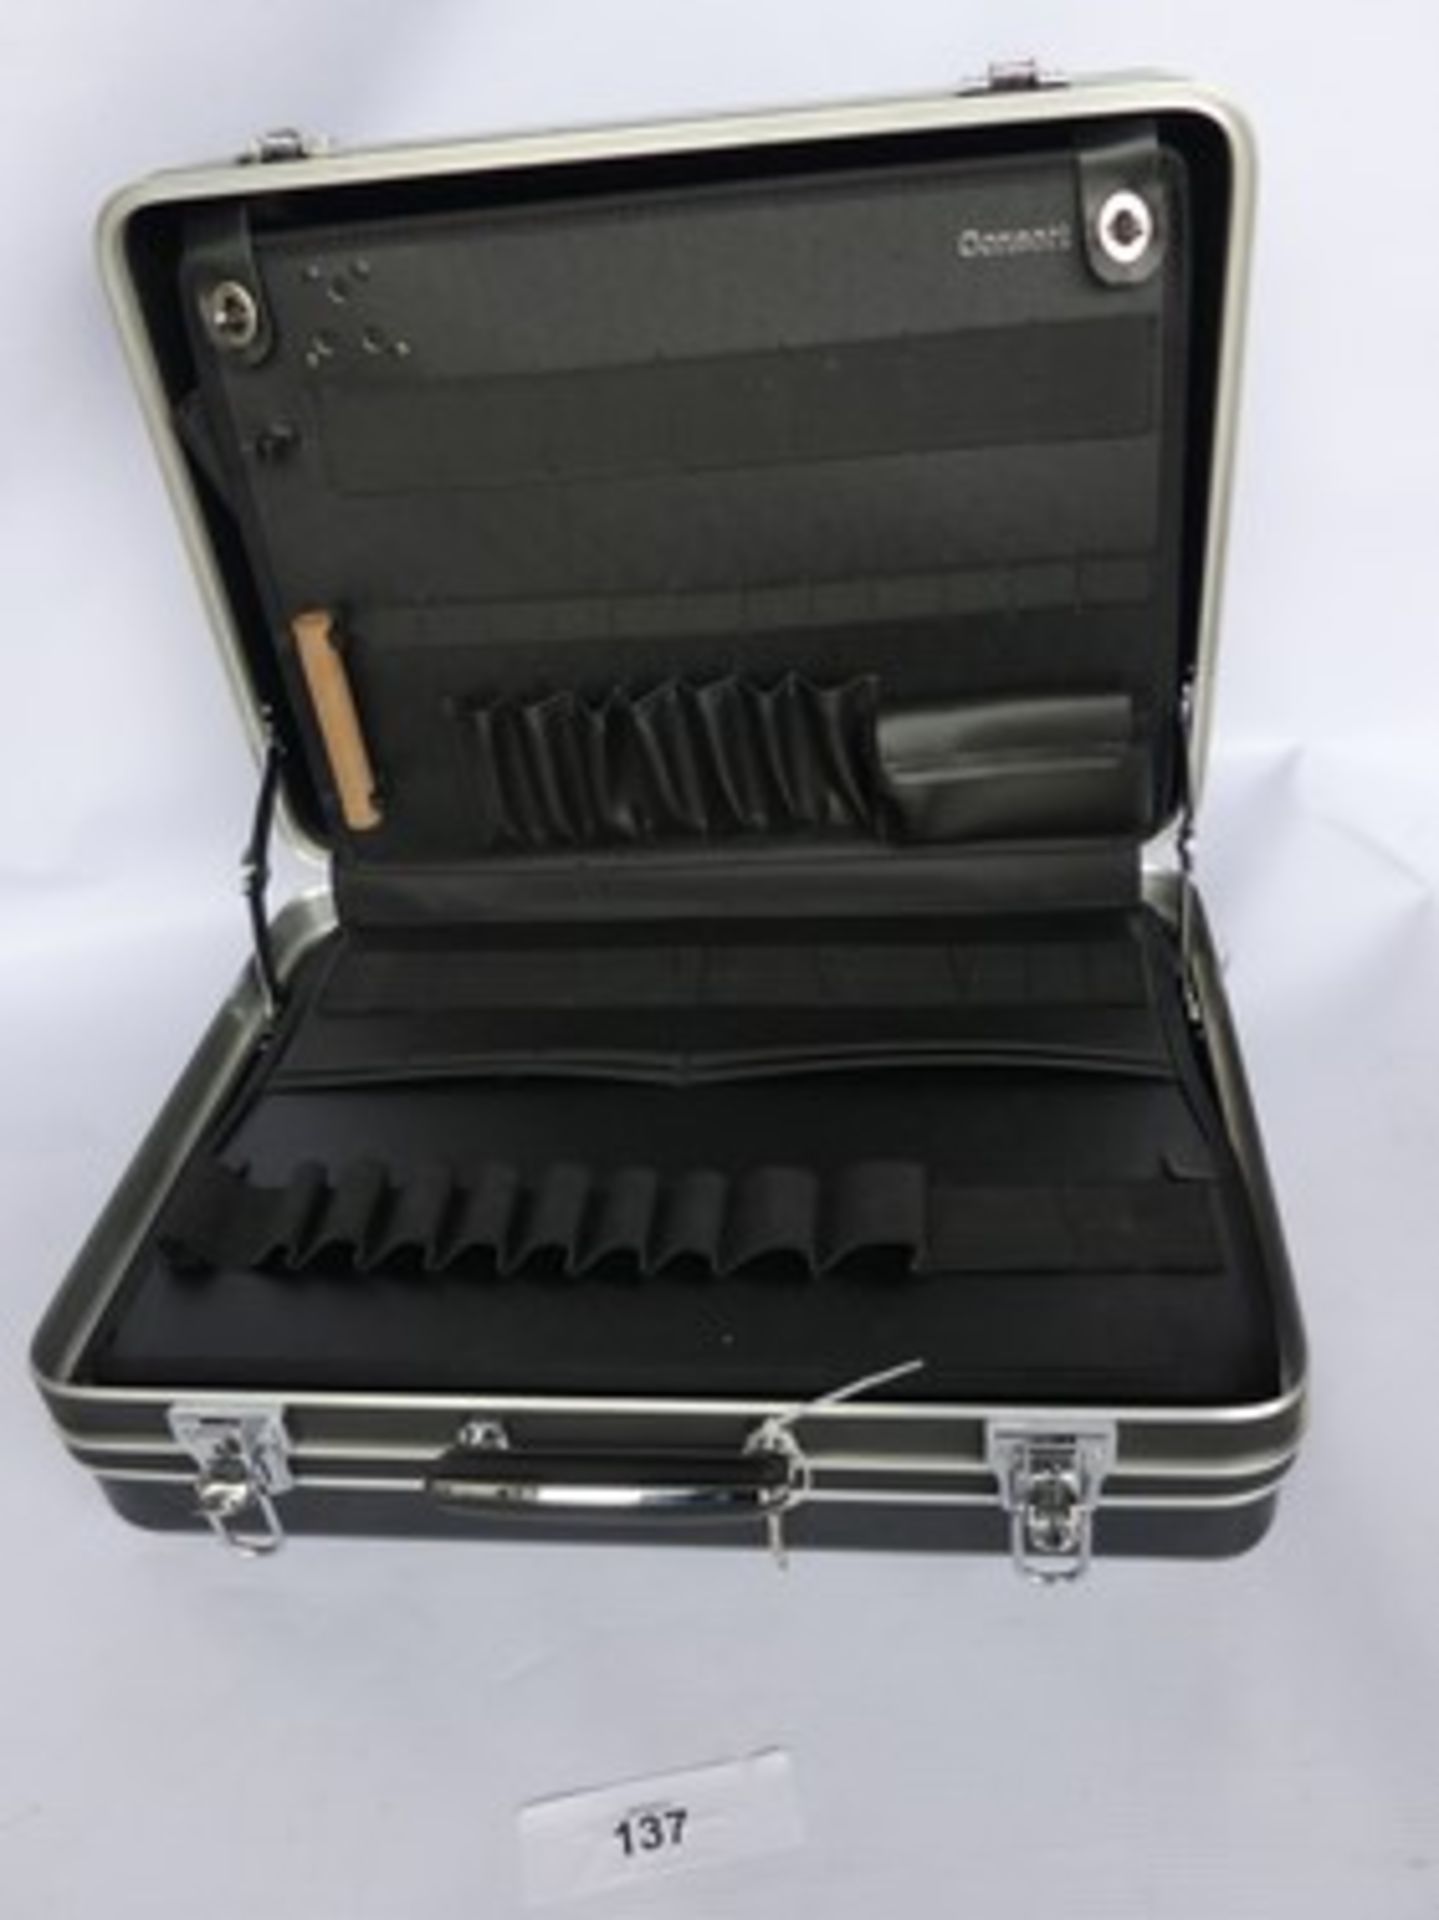 1 x consort plastic tool box with keys, size 50cm x 36cm x 20cm - New (SW4) - Image 2 of 3